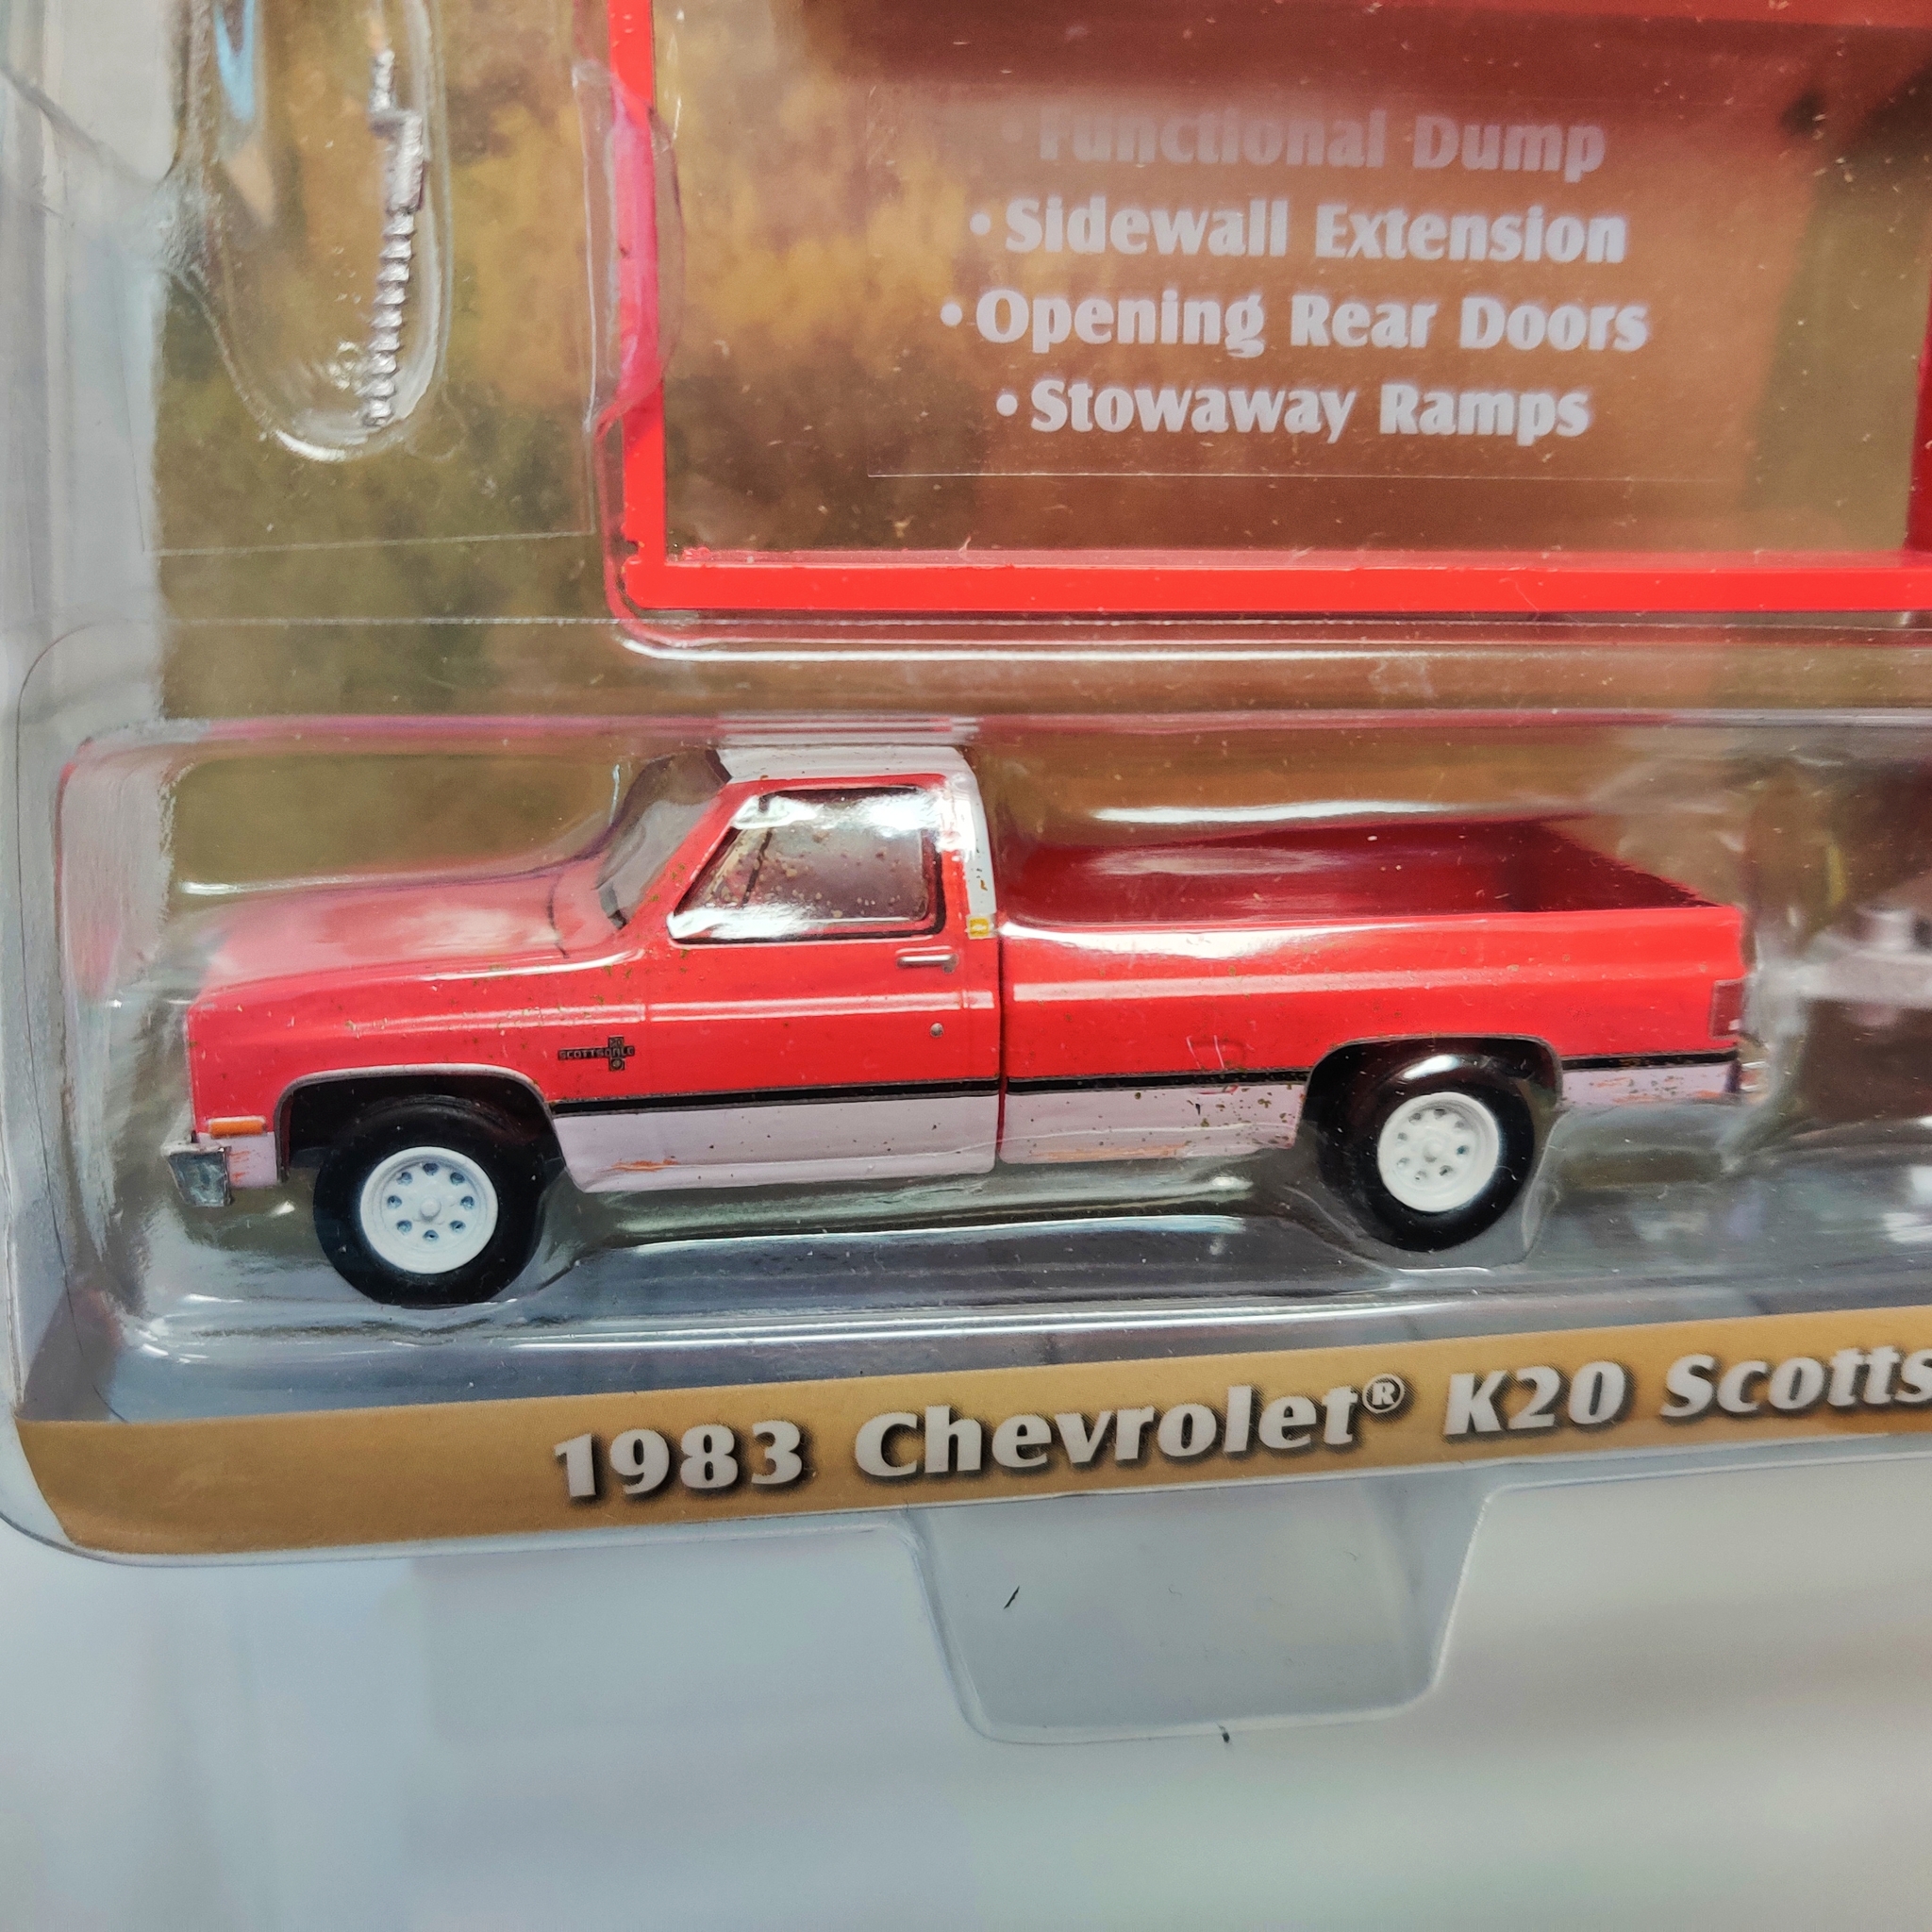 Skala 1/64 Greenlight "Hitch & Tow"" 1983 Chevrolet K20 Scottsdale m/w Double-Axle Dump Trailer